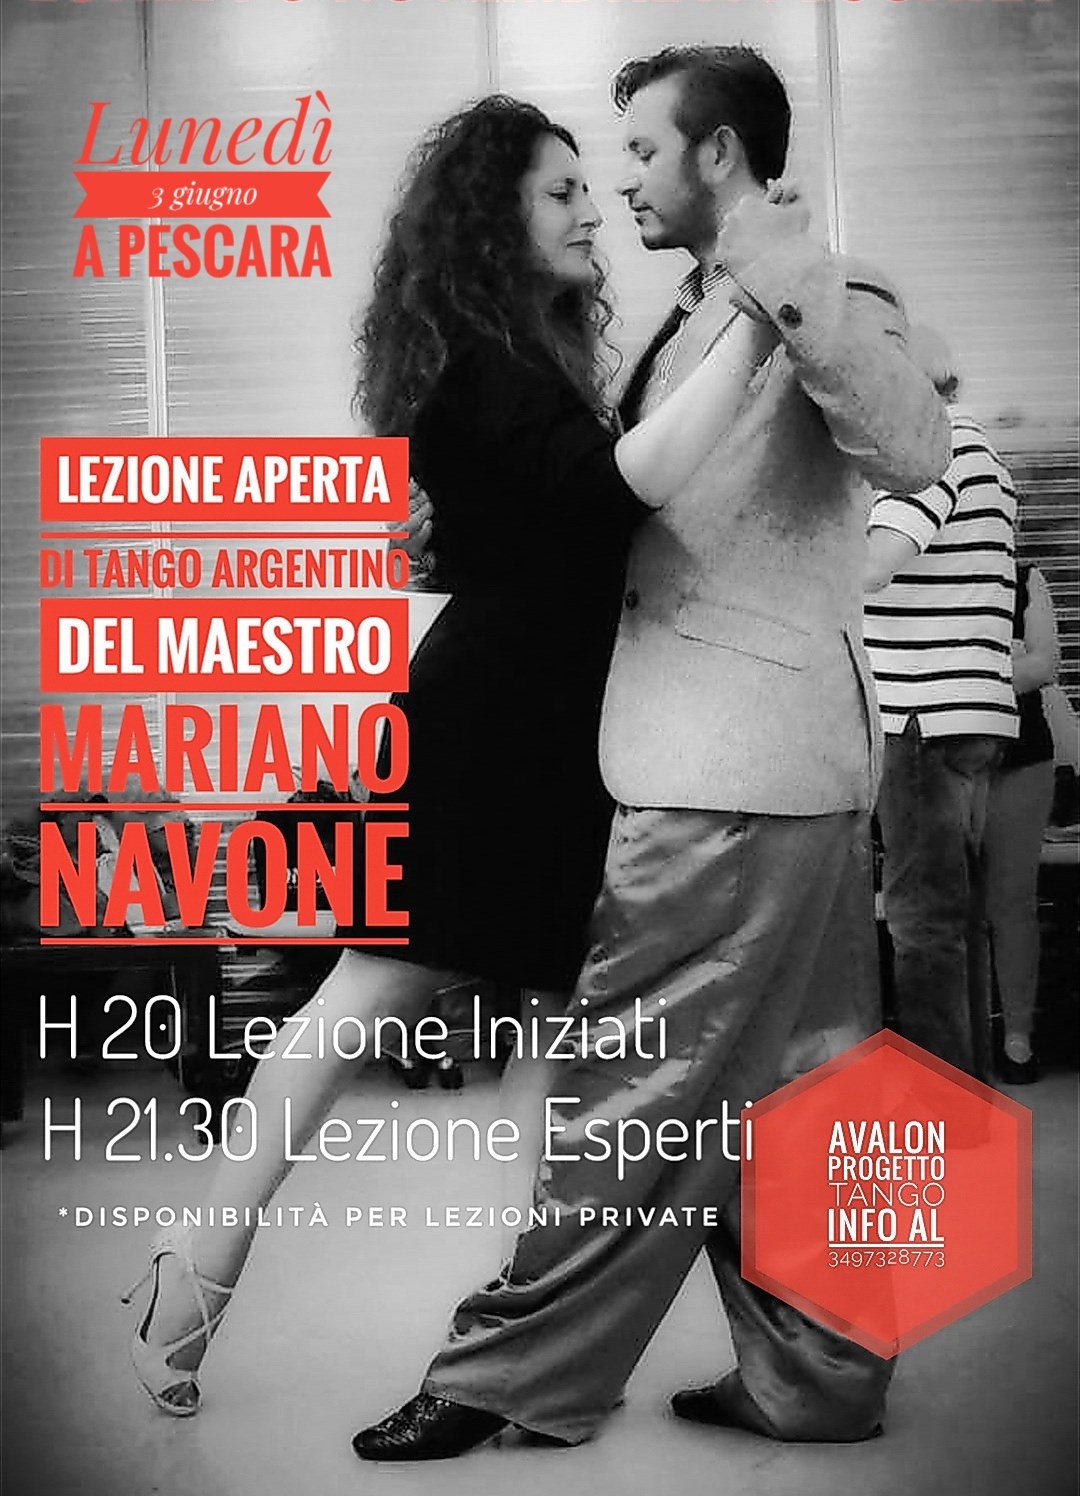 Zuleika Fusco e Mariano Navone - Avalon Progetto Tango Pescara